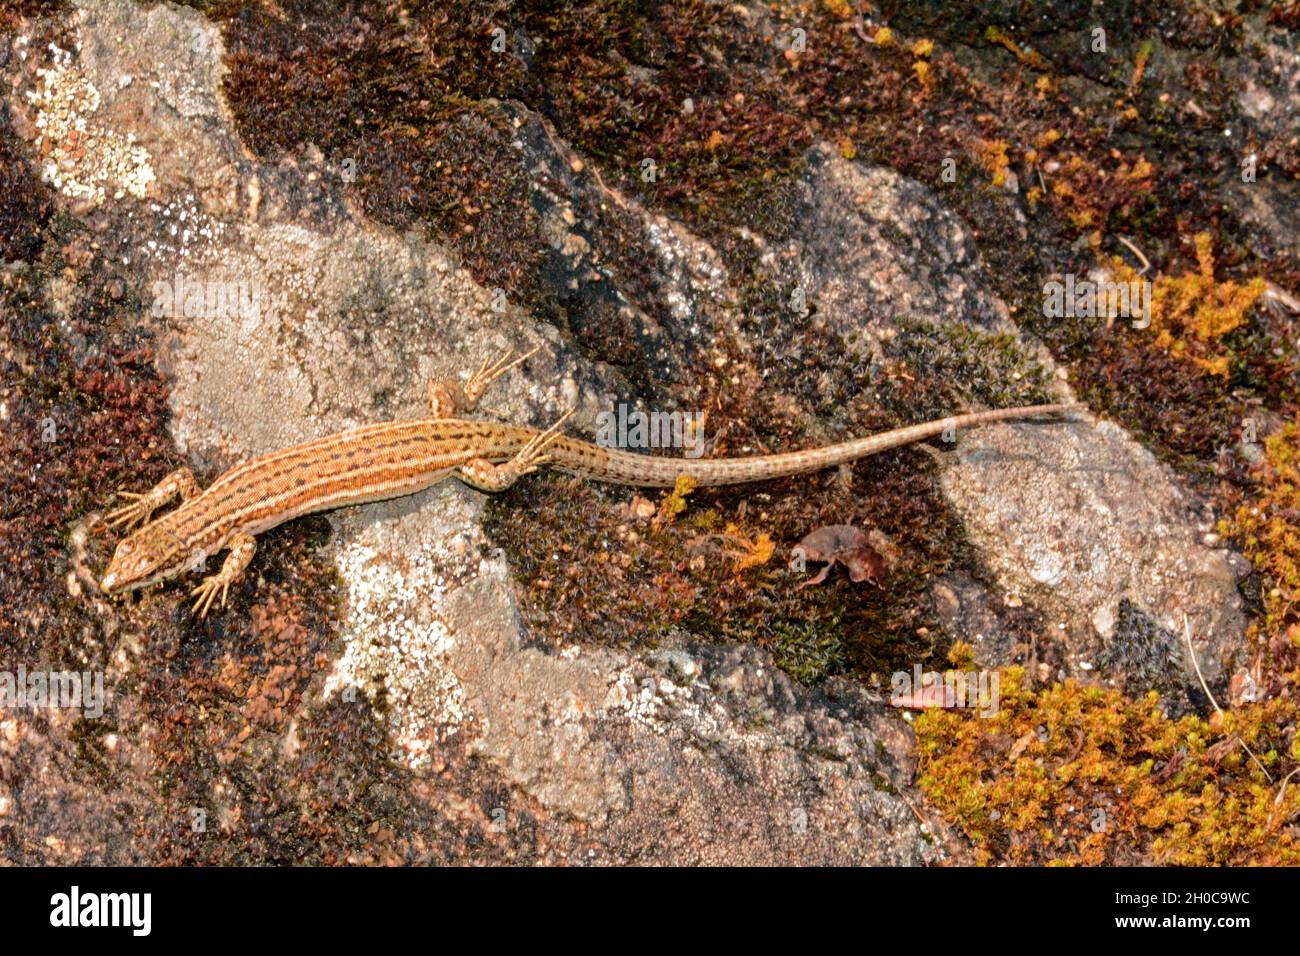 Iberian Wall Lizard (Podarcis hispanica) on rock, Insolation, Ardeche, France Stock Photo